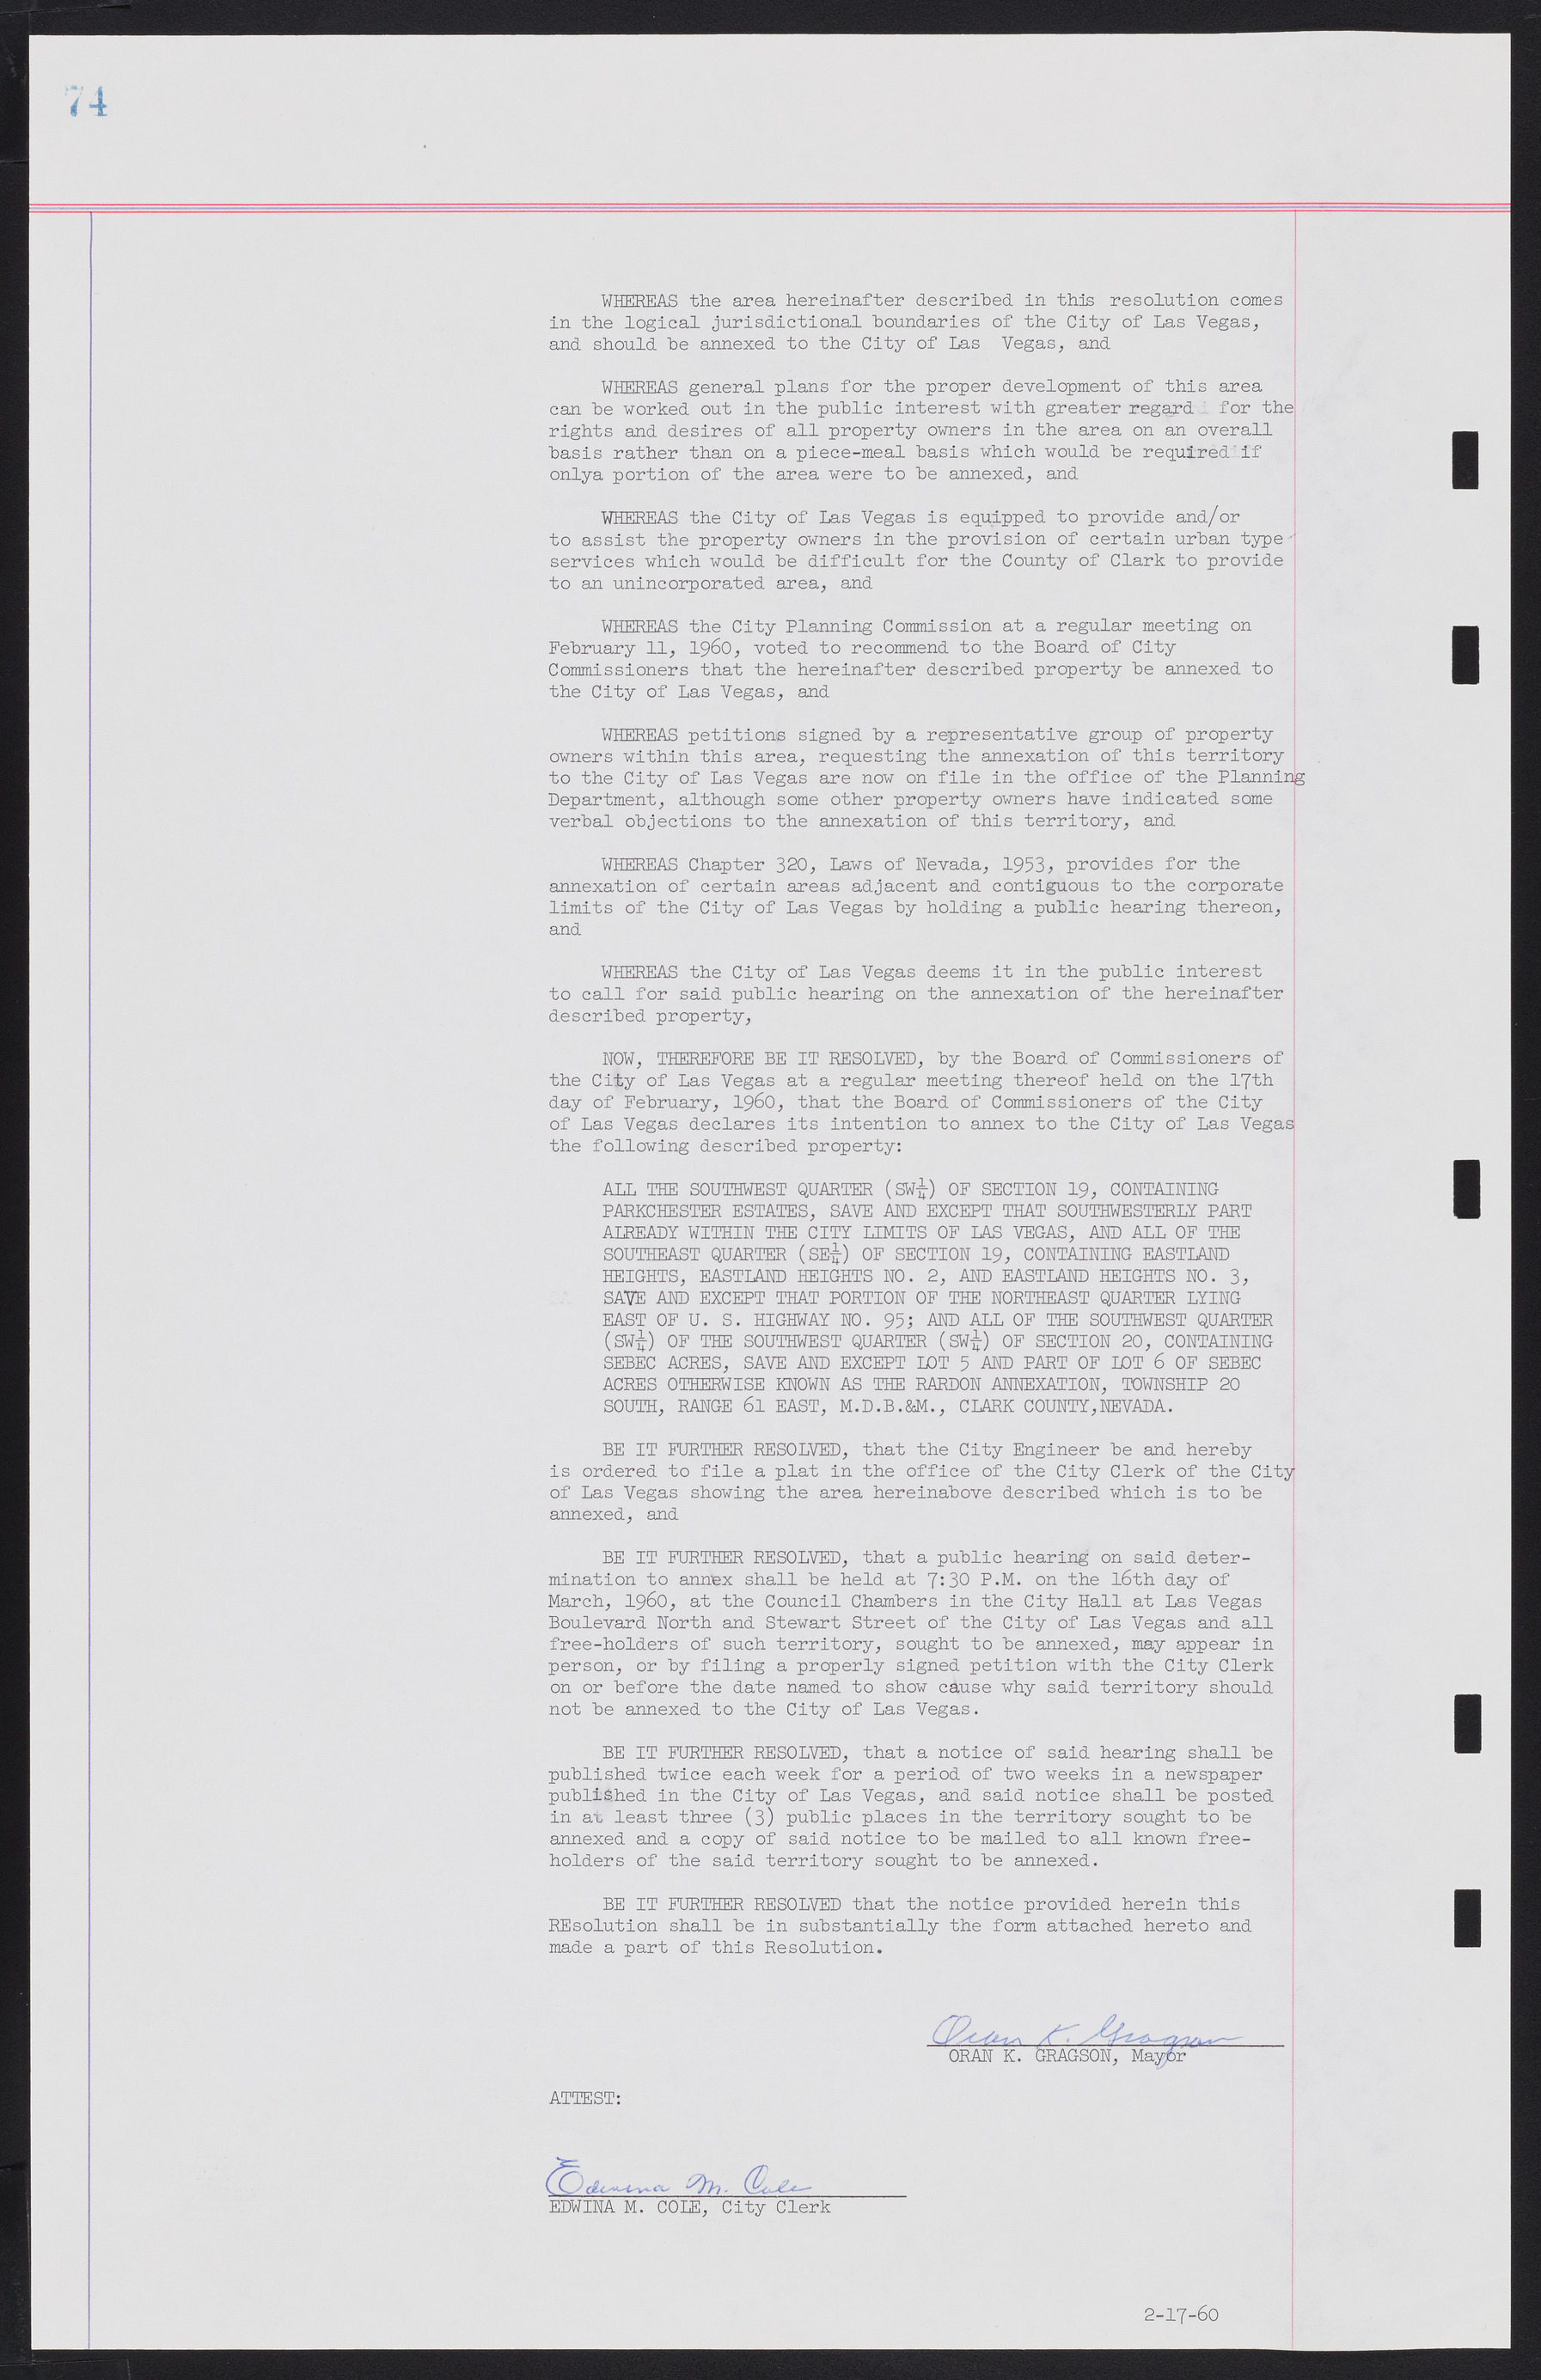 Las Vegas City Commission Minutes, December 8, 1959 to February 17, 1960, lvc000012-78